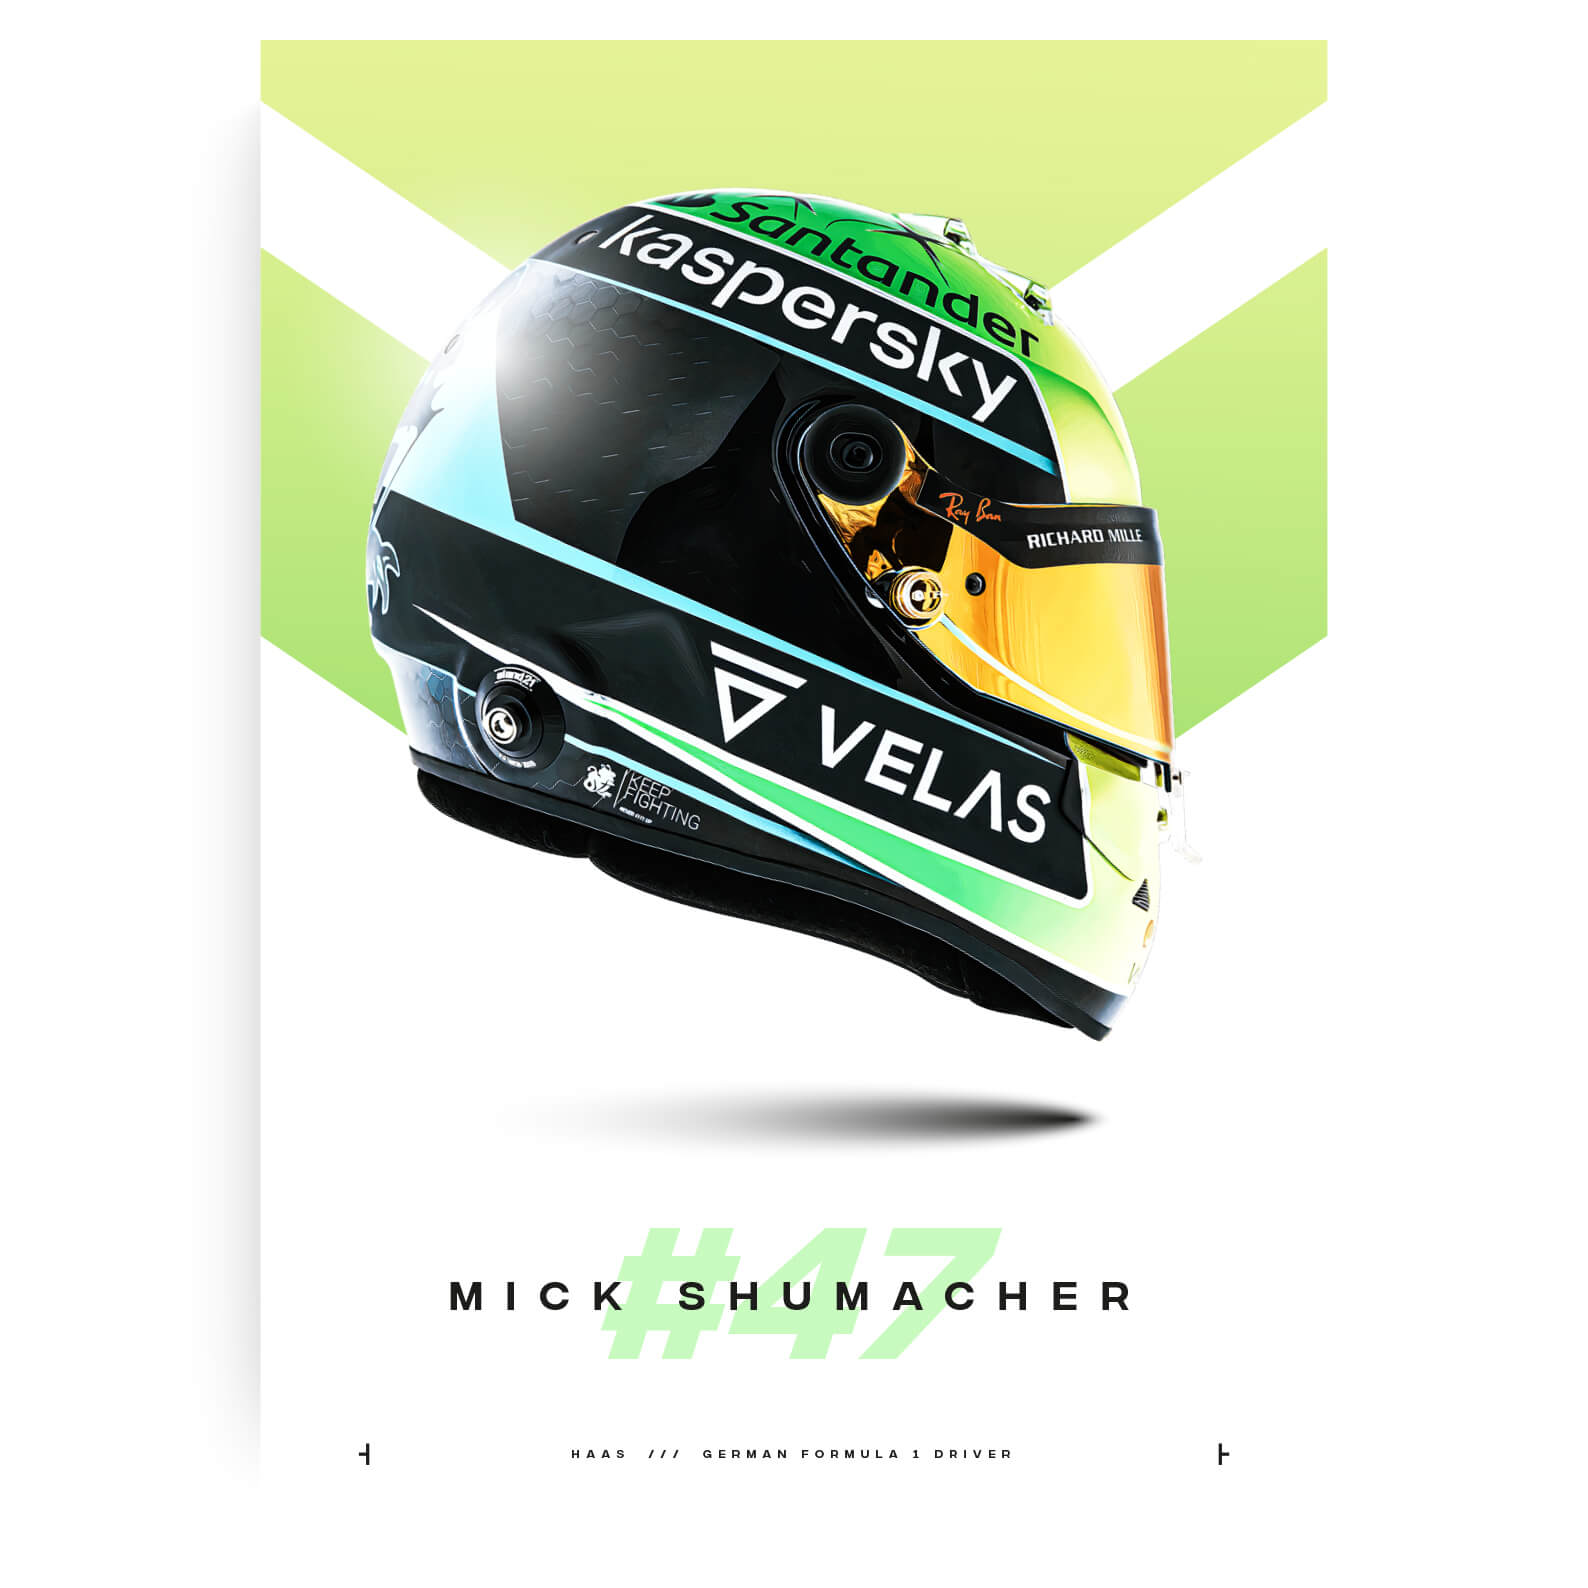 Mick Schumacher print/poster without frame